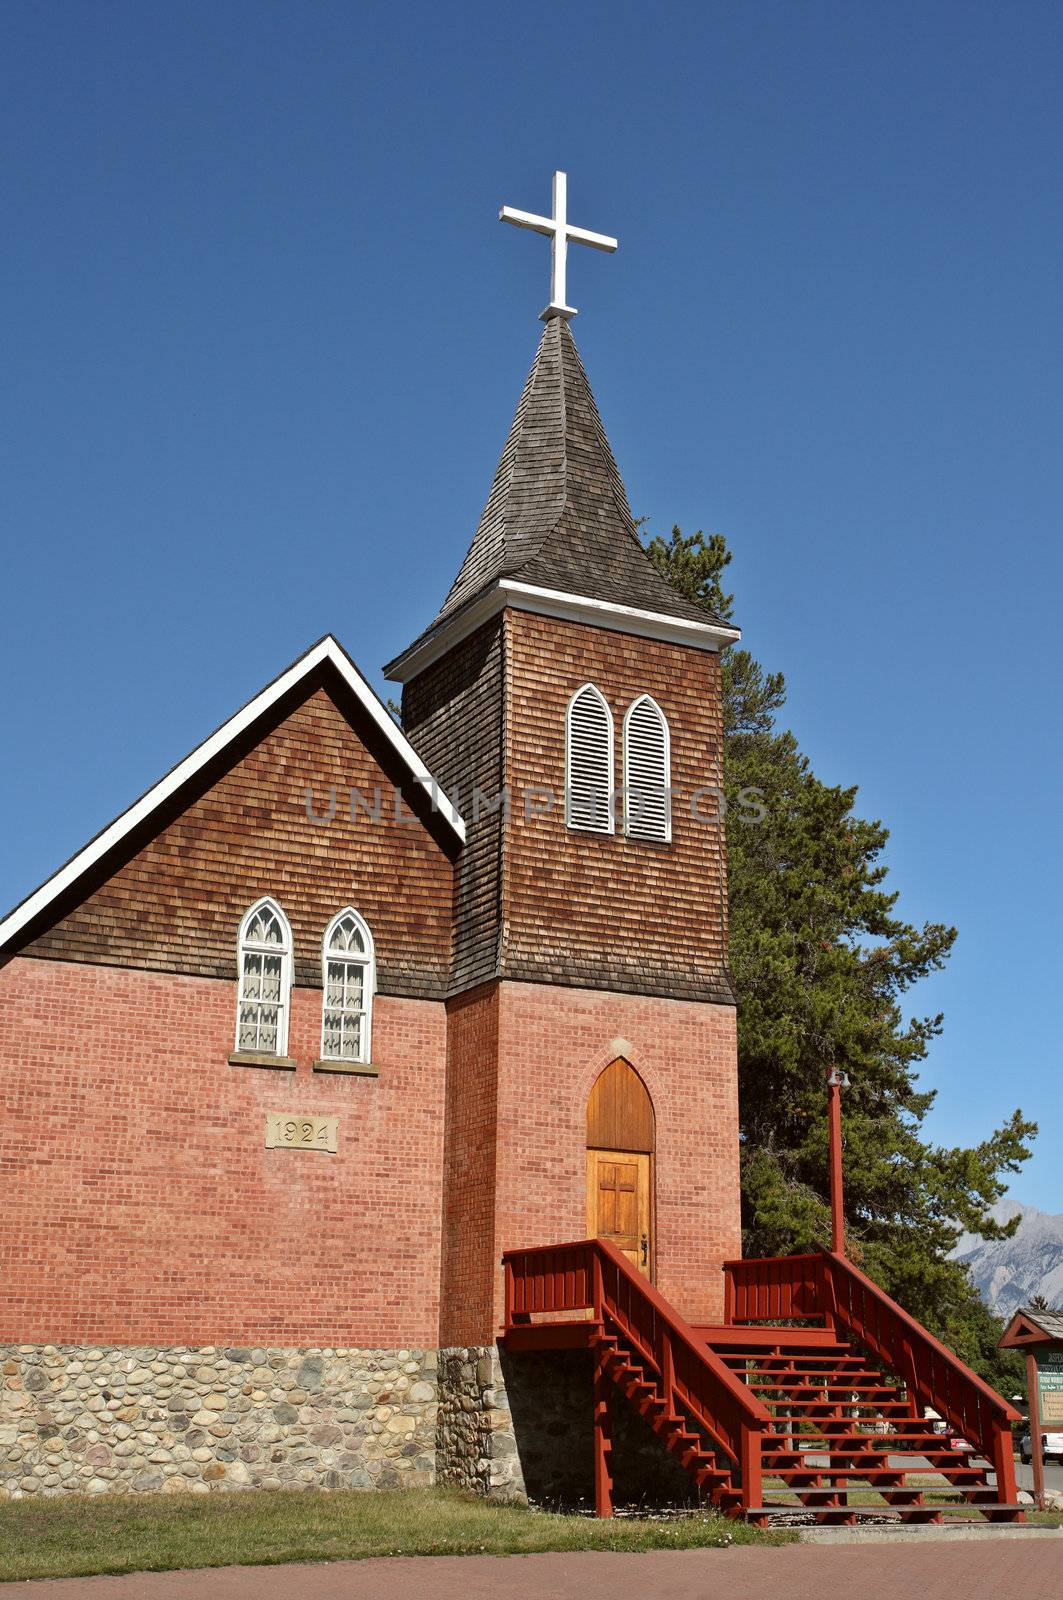 Old church in Jasper Alberta